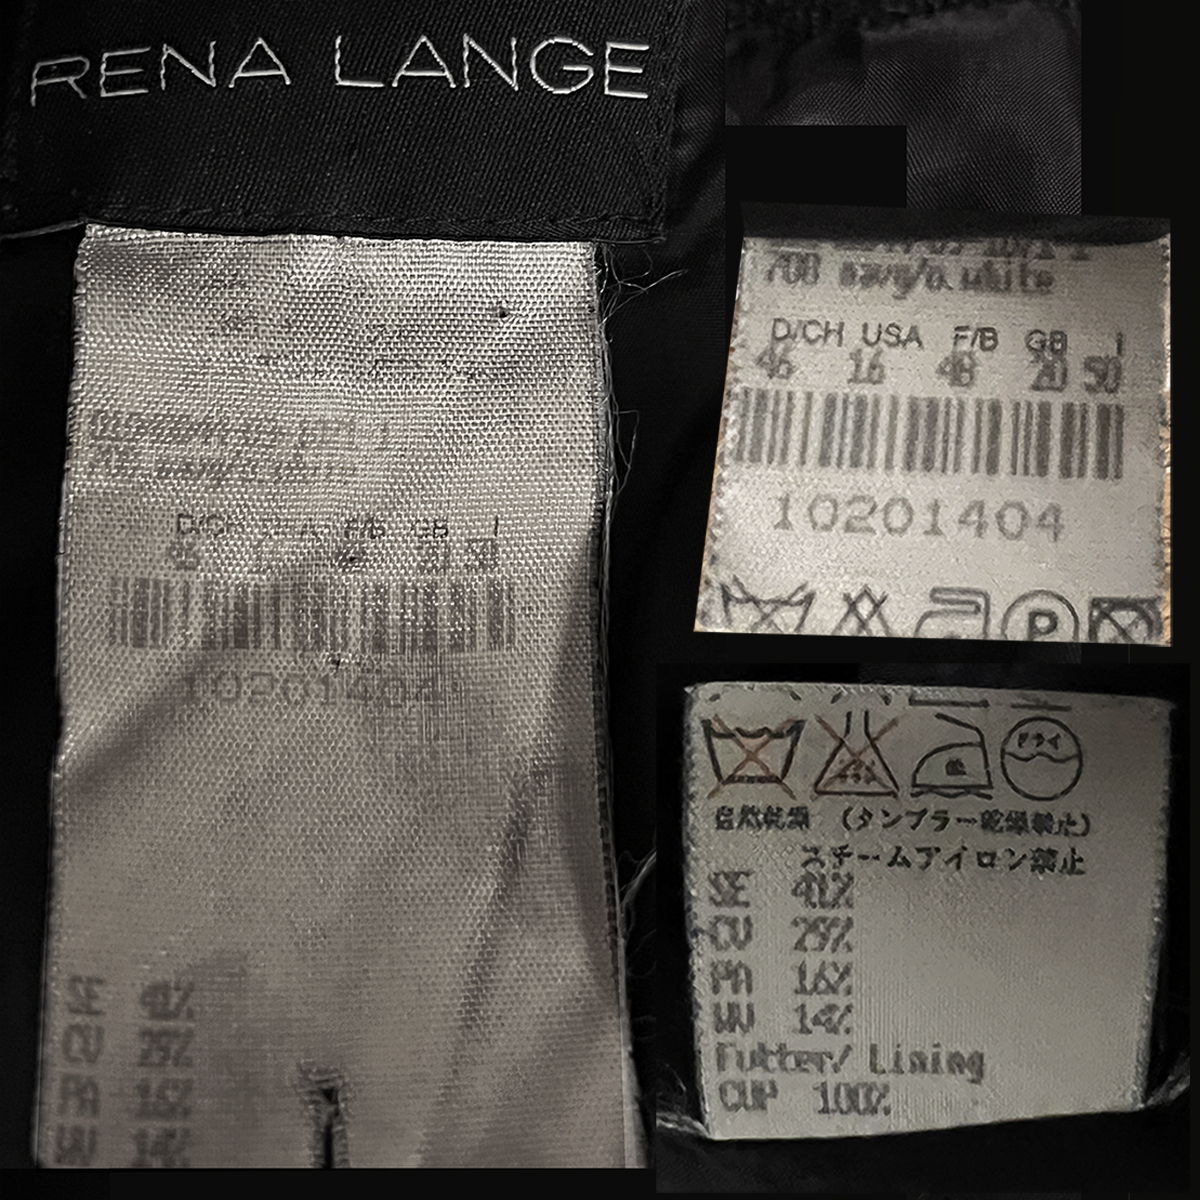 Rena Lange clothing labels